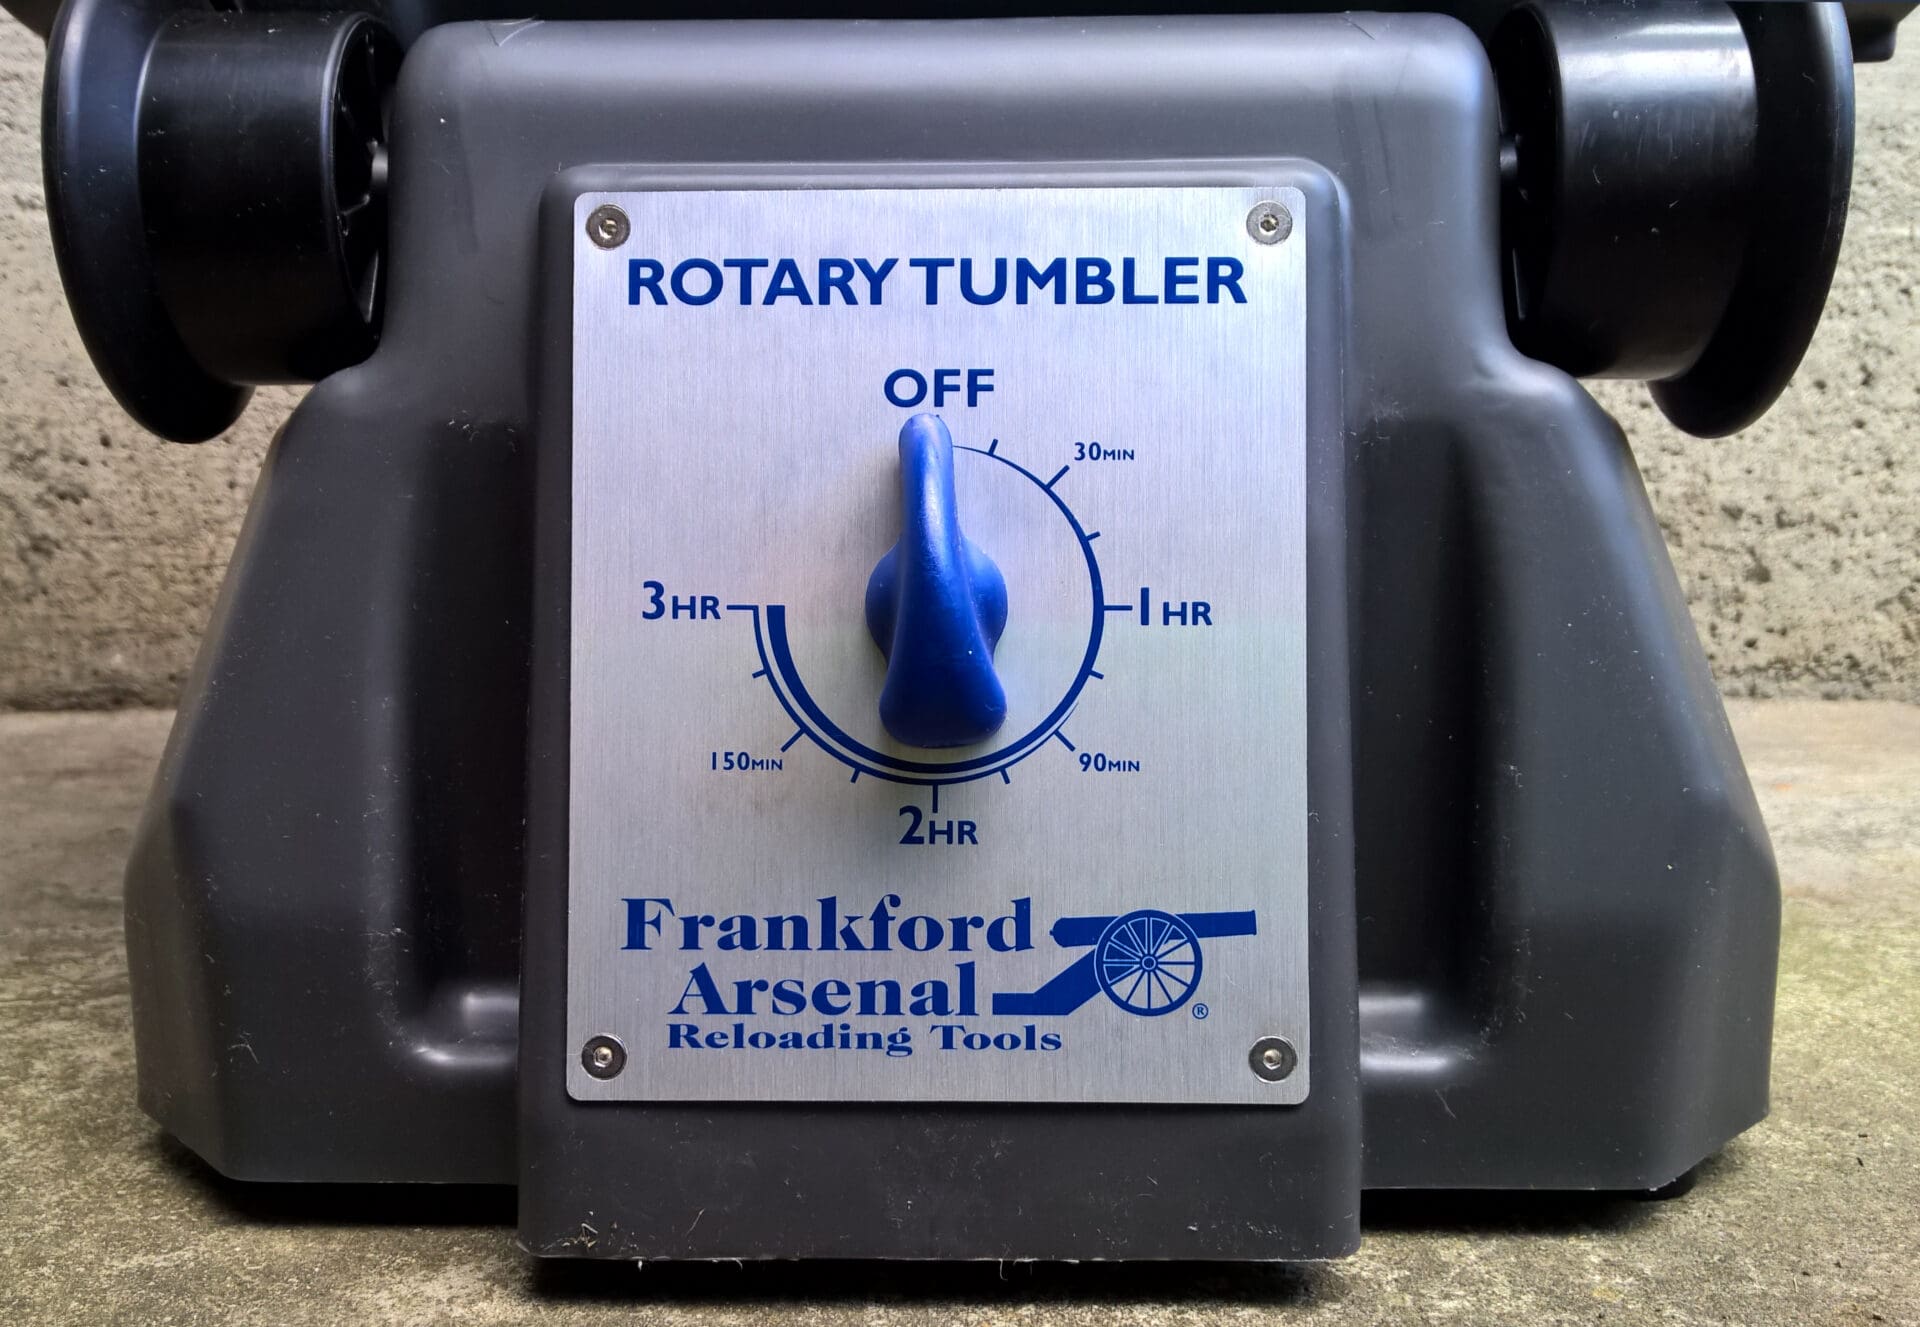 FrankFord Arsenal Introduces Platinum Series Rotary Tumbler